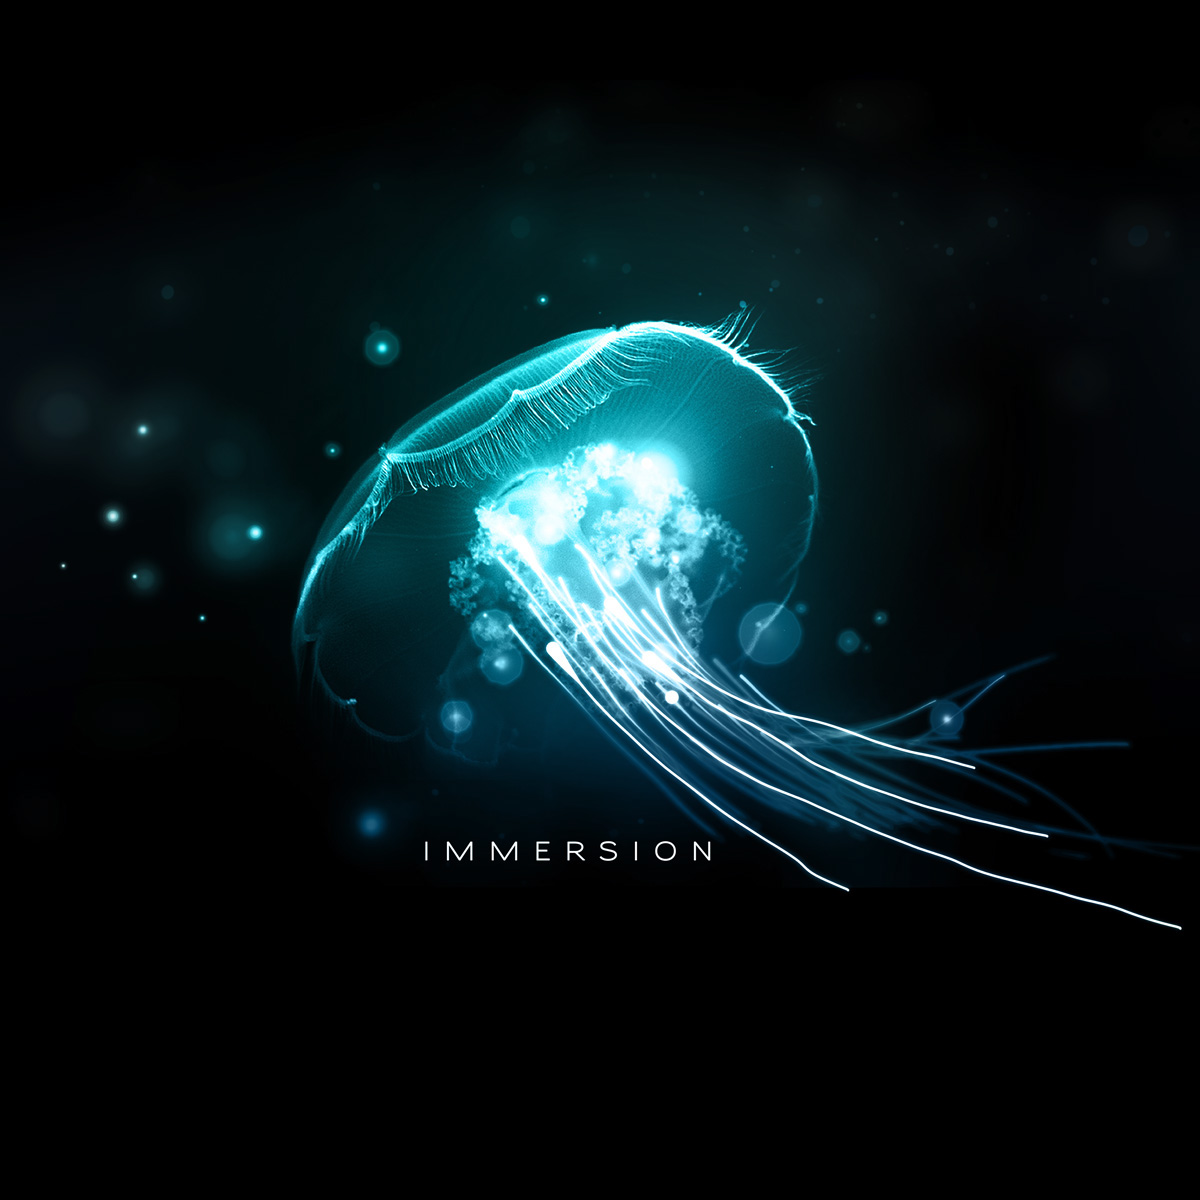 pendulum Immersion deep sea jellyfish ghost creative underwater sinister Album album cover abstract illusion album art